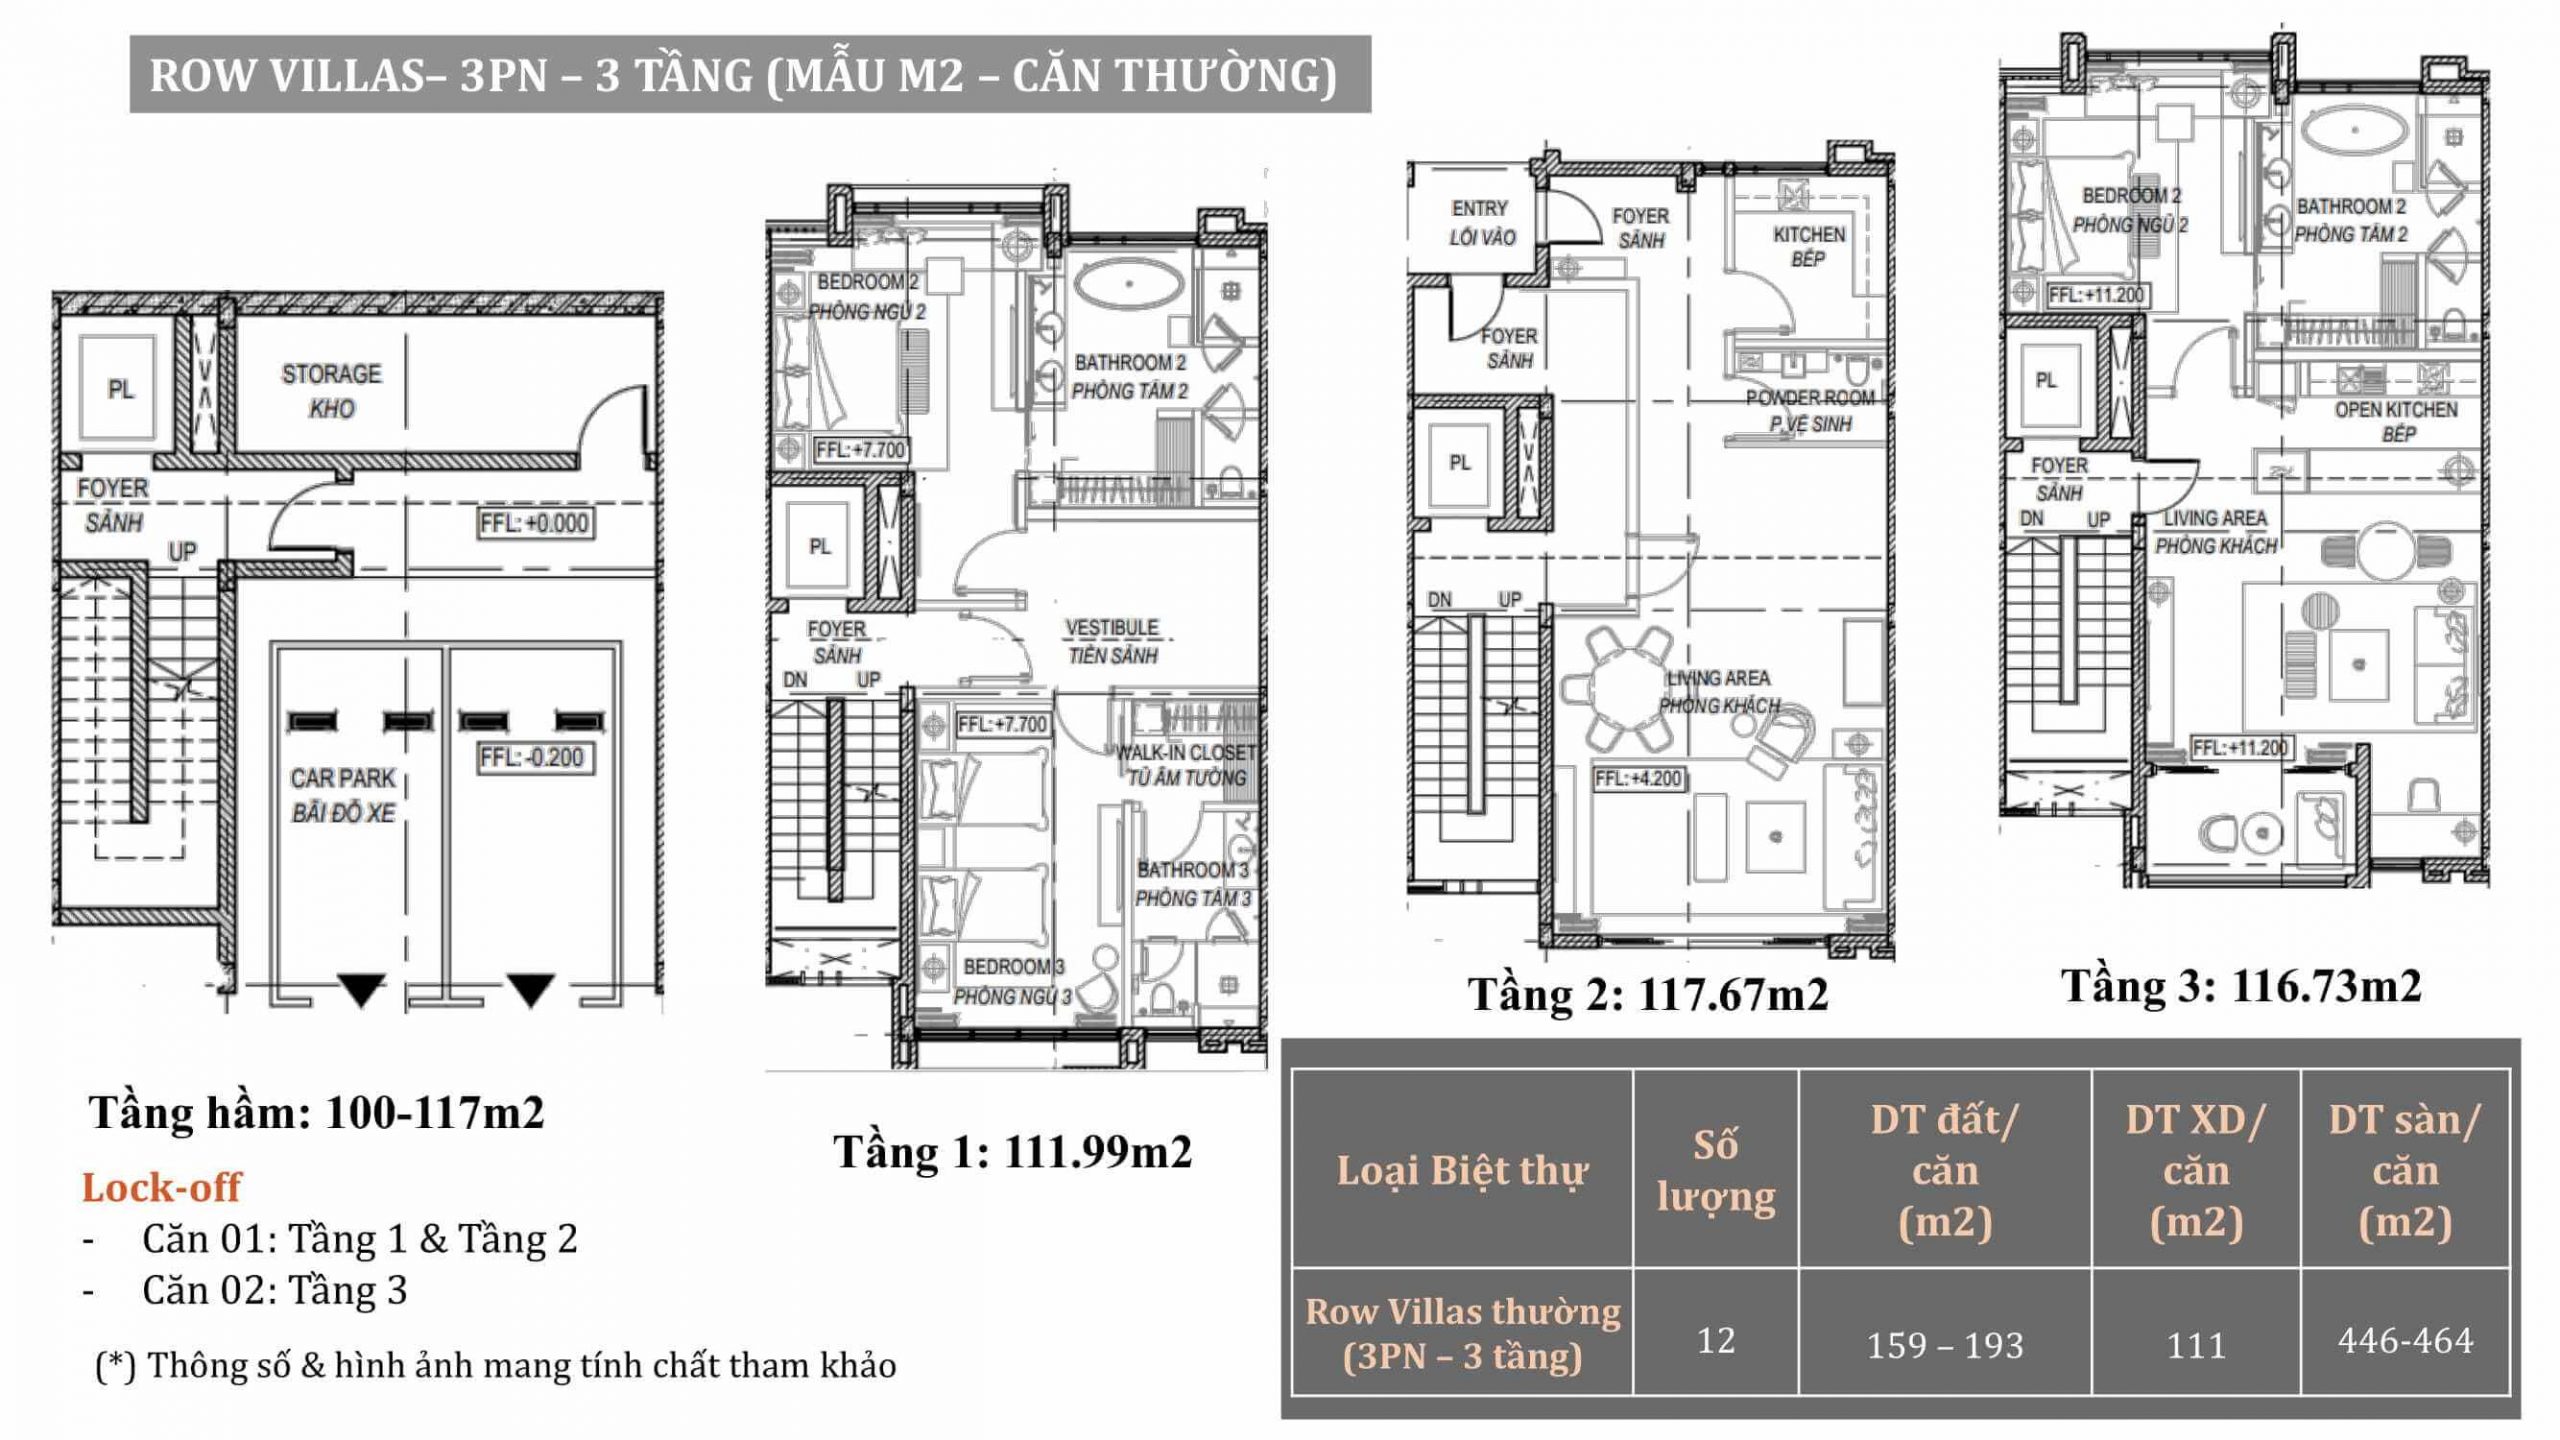 intercontinental-ha-long-bay-row-villas-can-thuong-m2